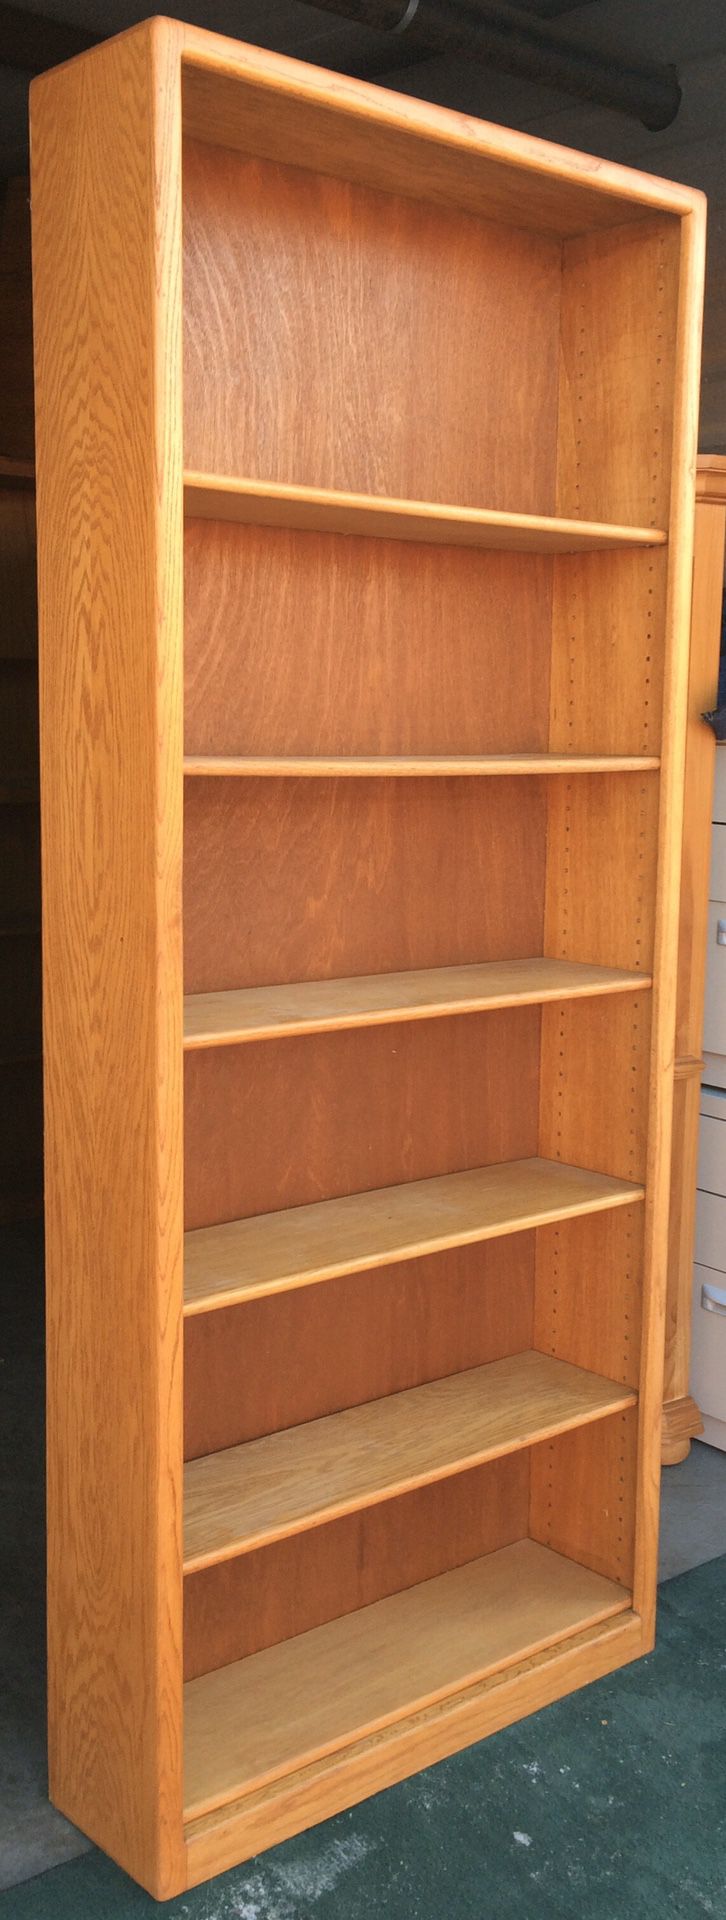 7 Tier Oak Bookcase / Bookshelf / Storage Display Shelves